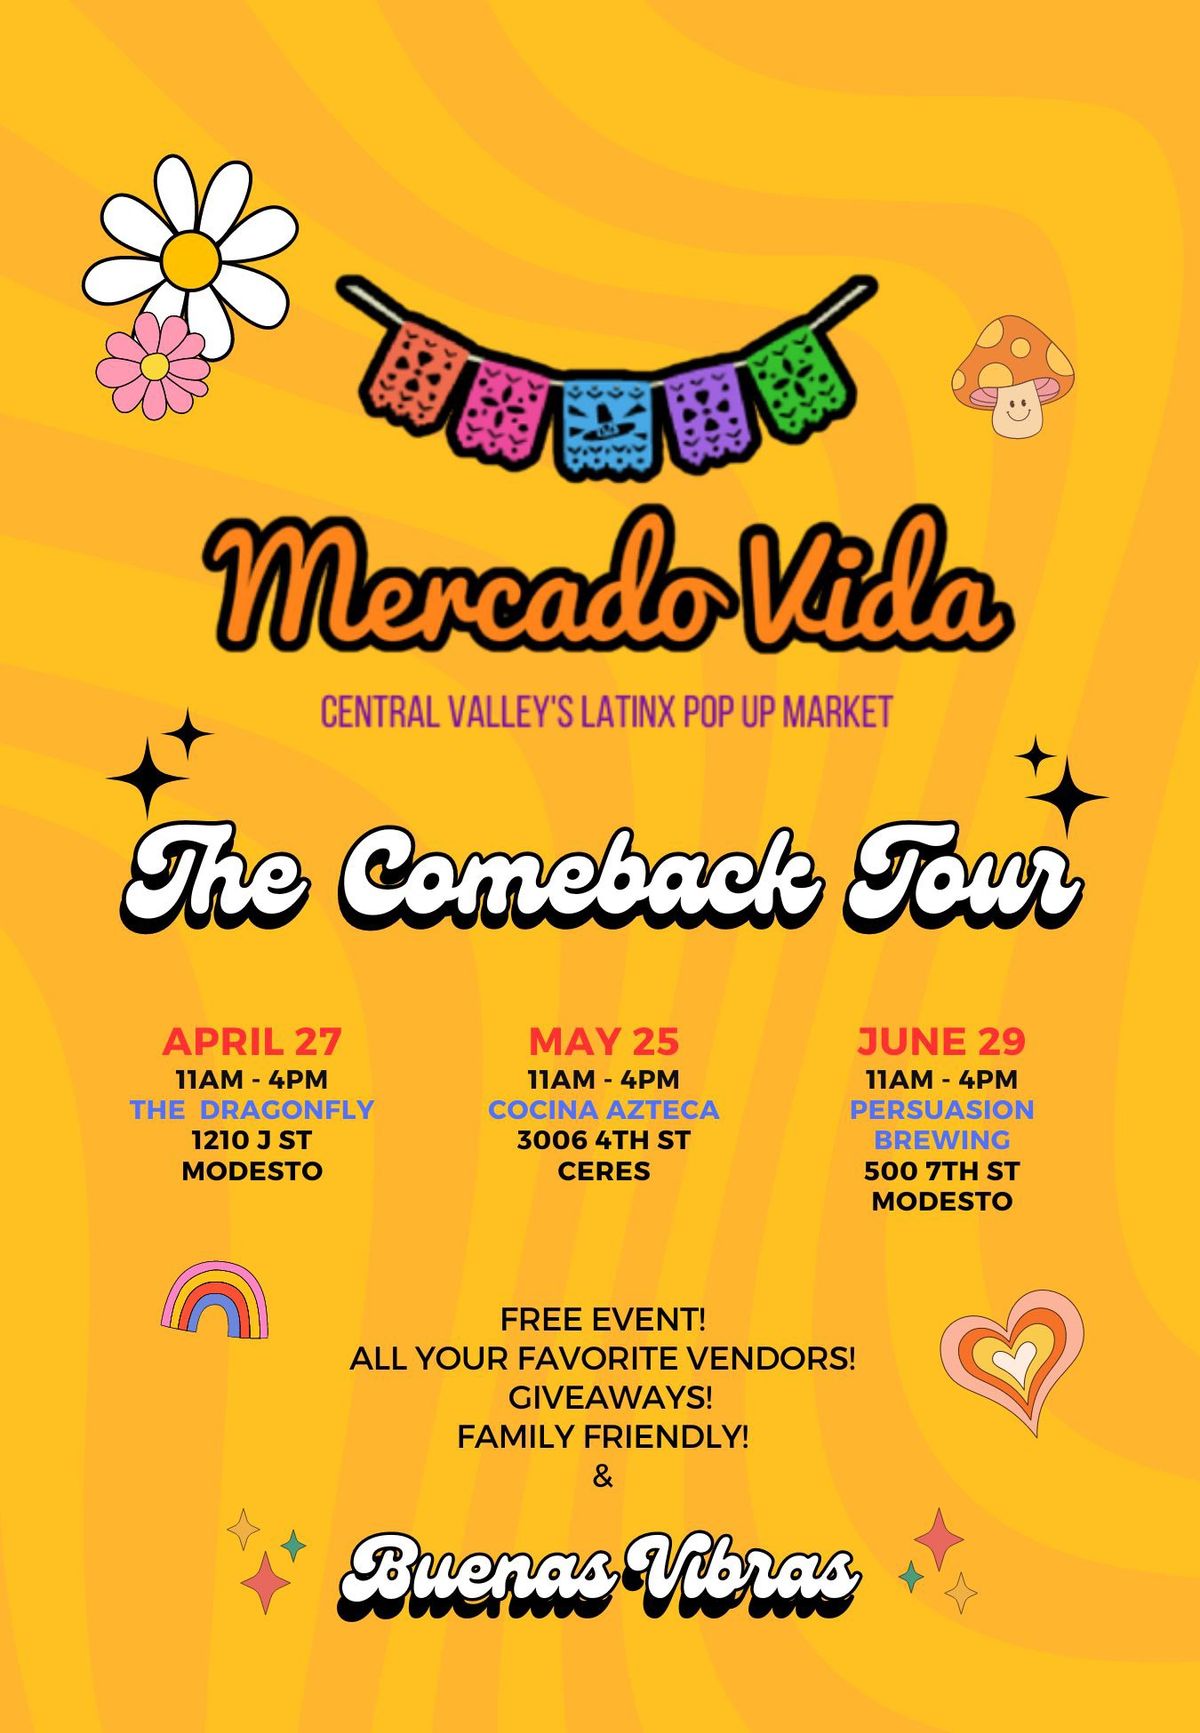 Mercado Vida - 1st Stop On The Comeback Tour 